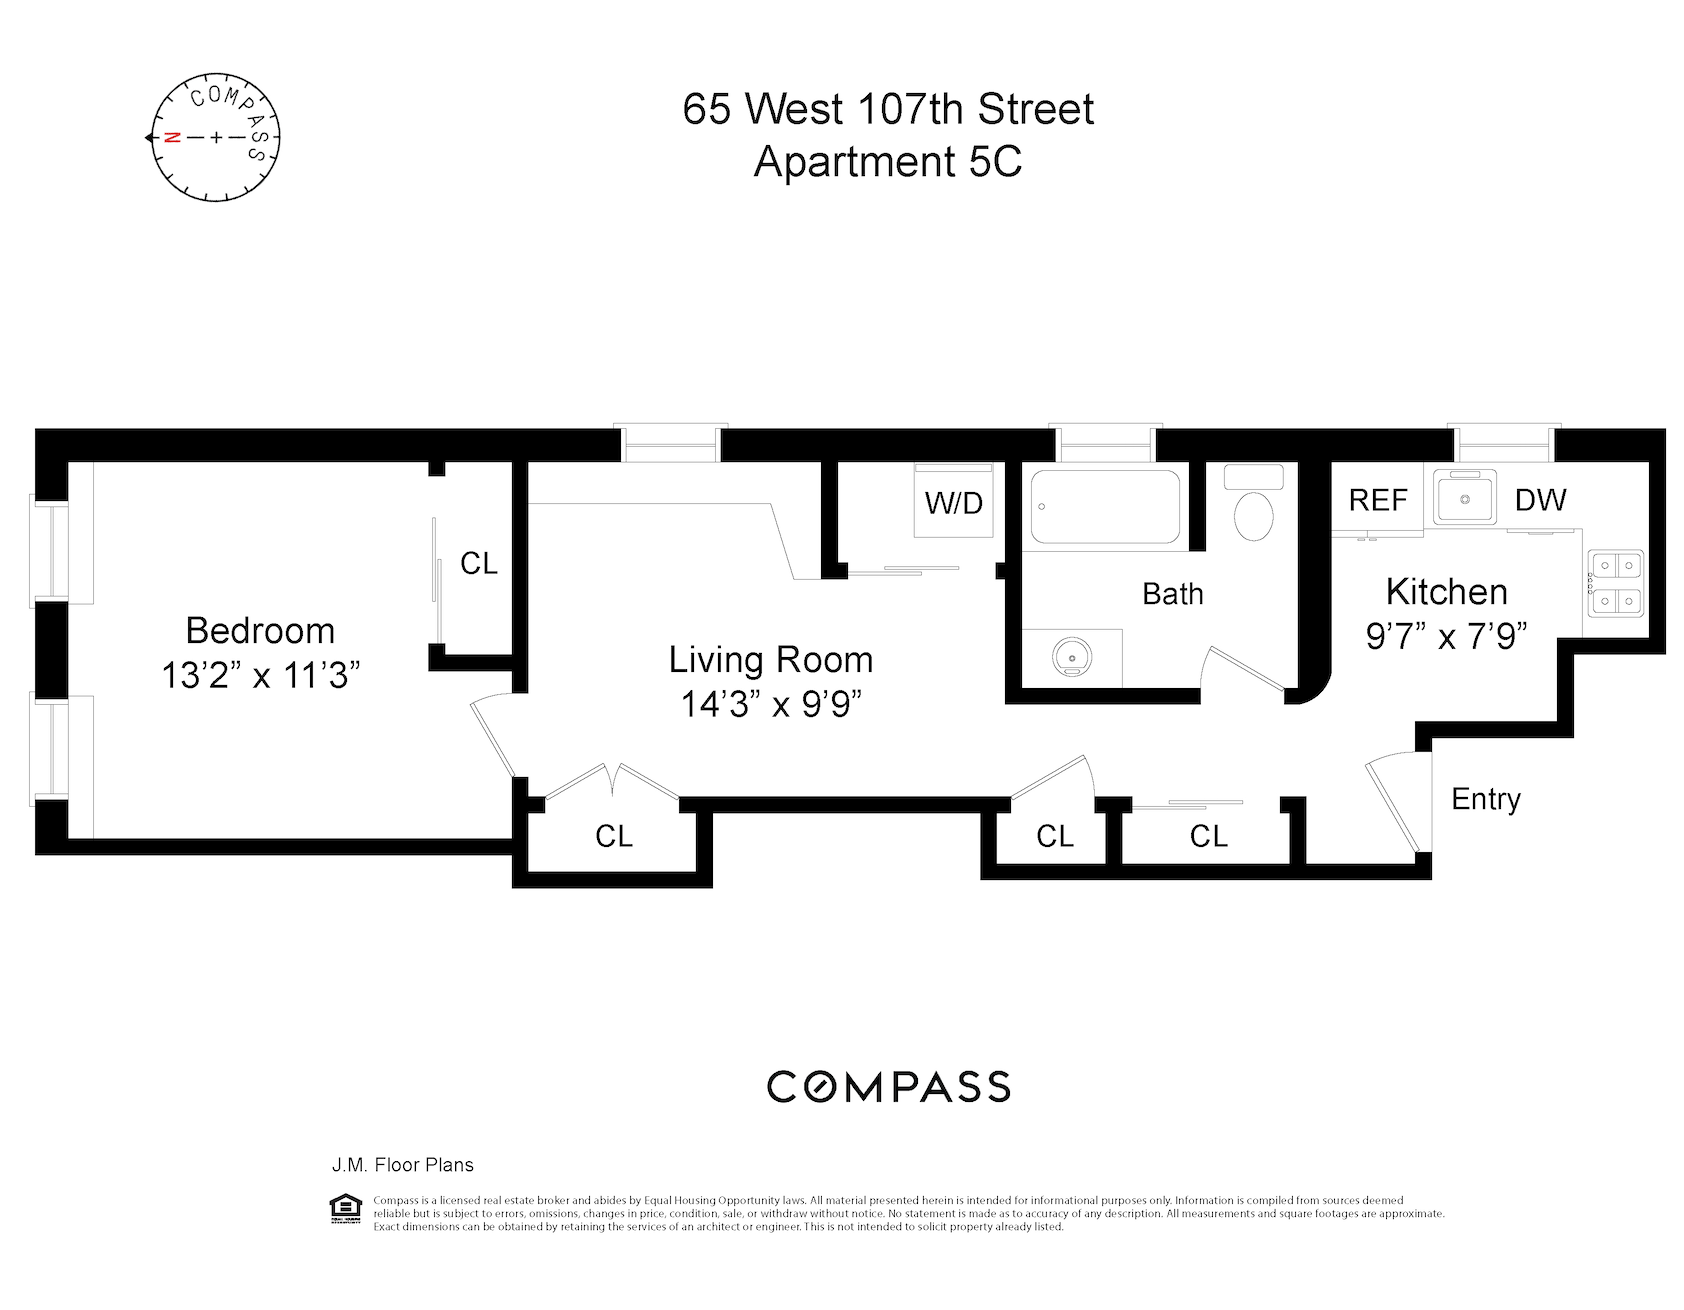 Floorplan for 65 West 107th Street, 5C